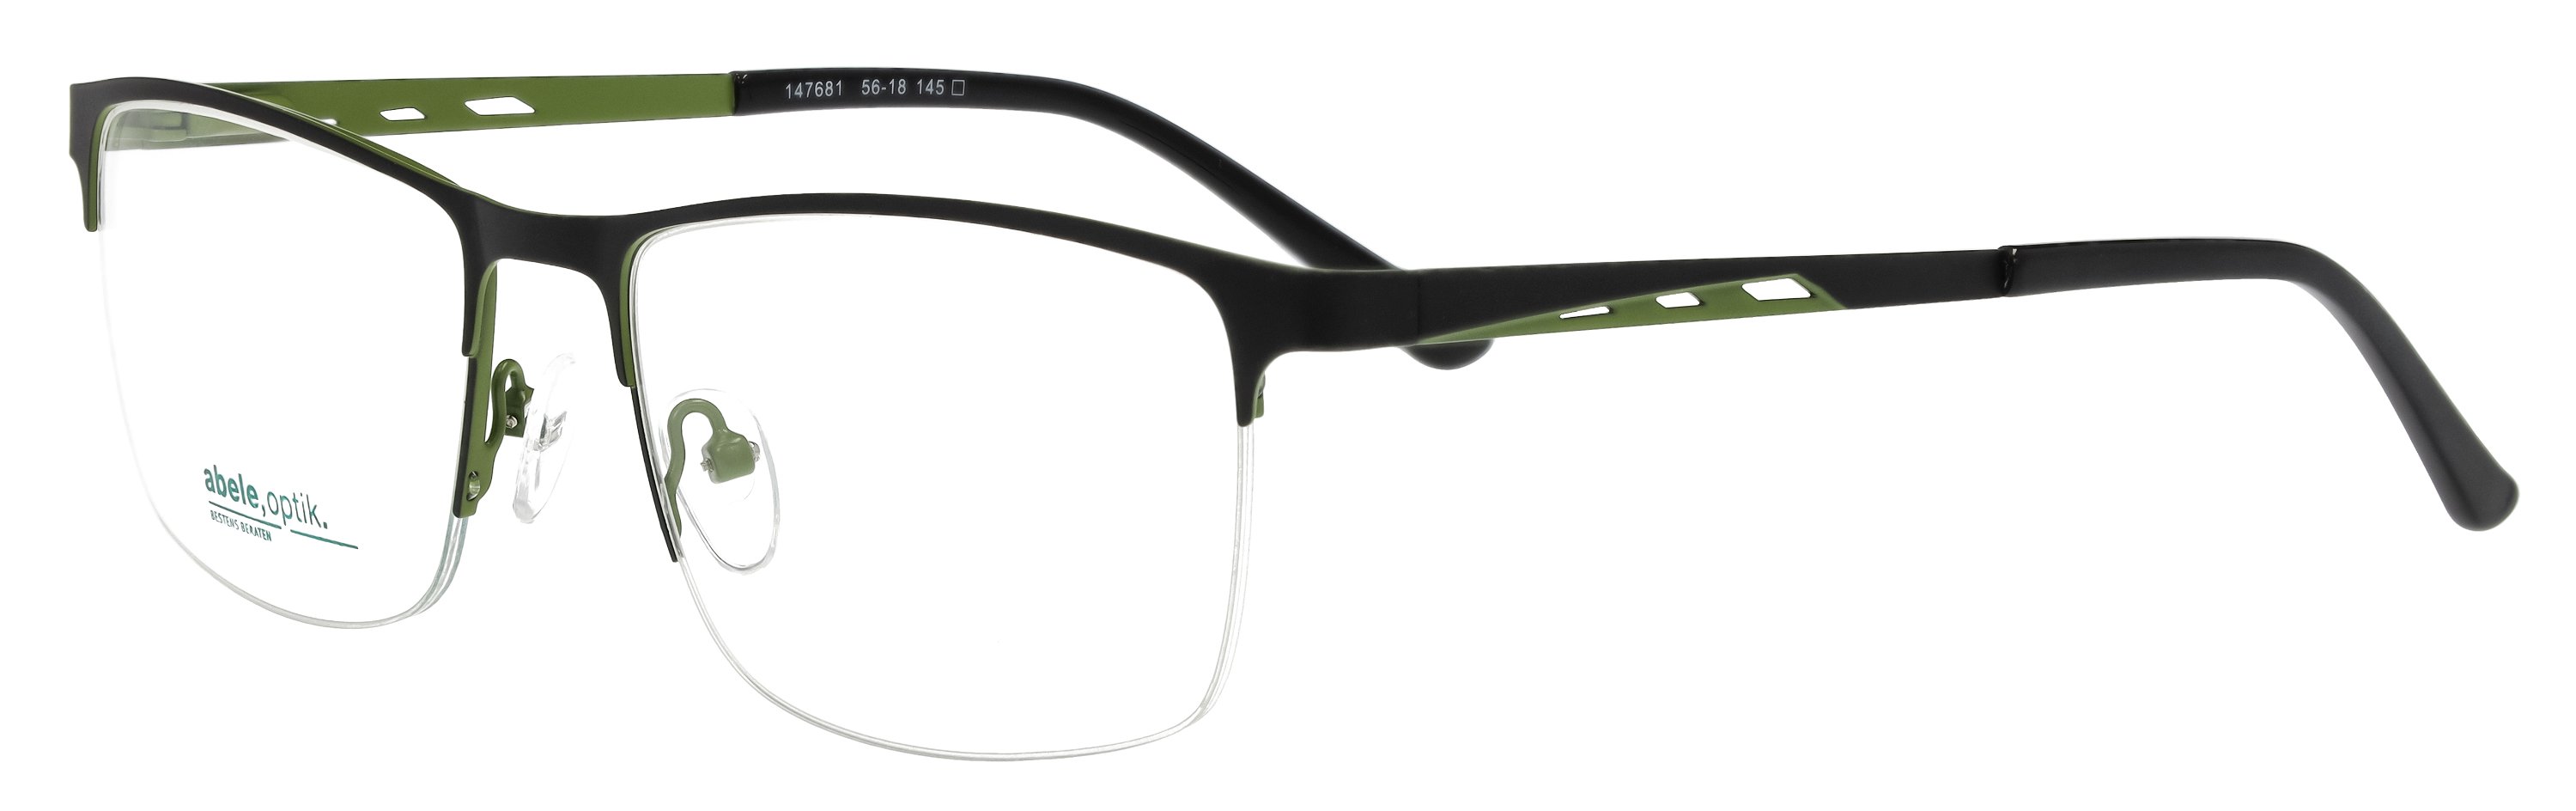 abele optik Brille für Herren in schwarz matt Nylor 147681